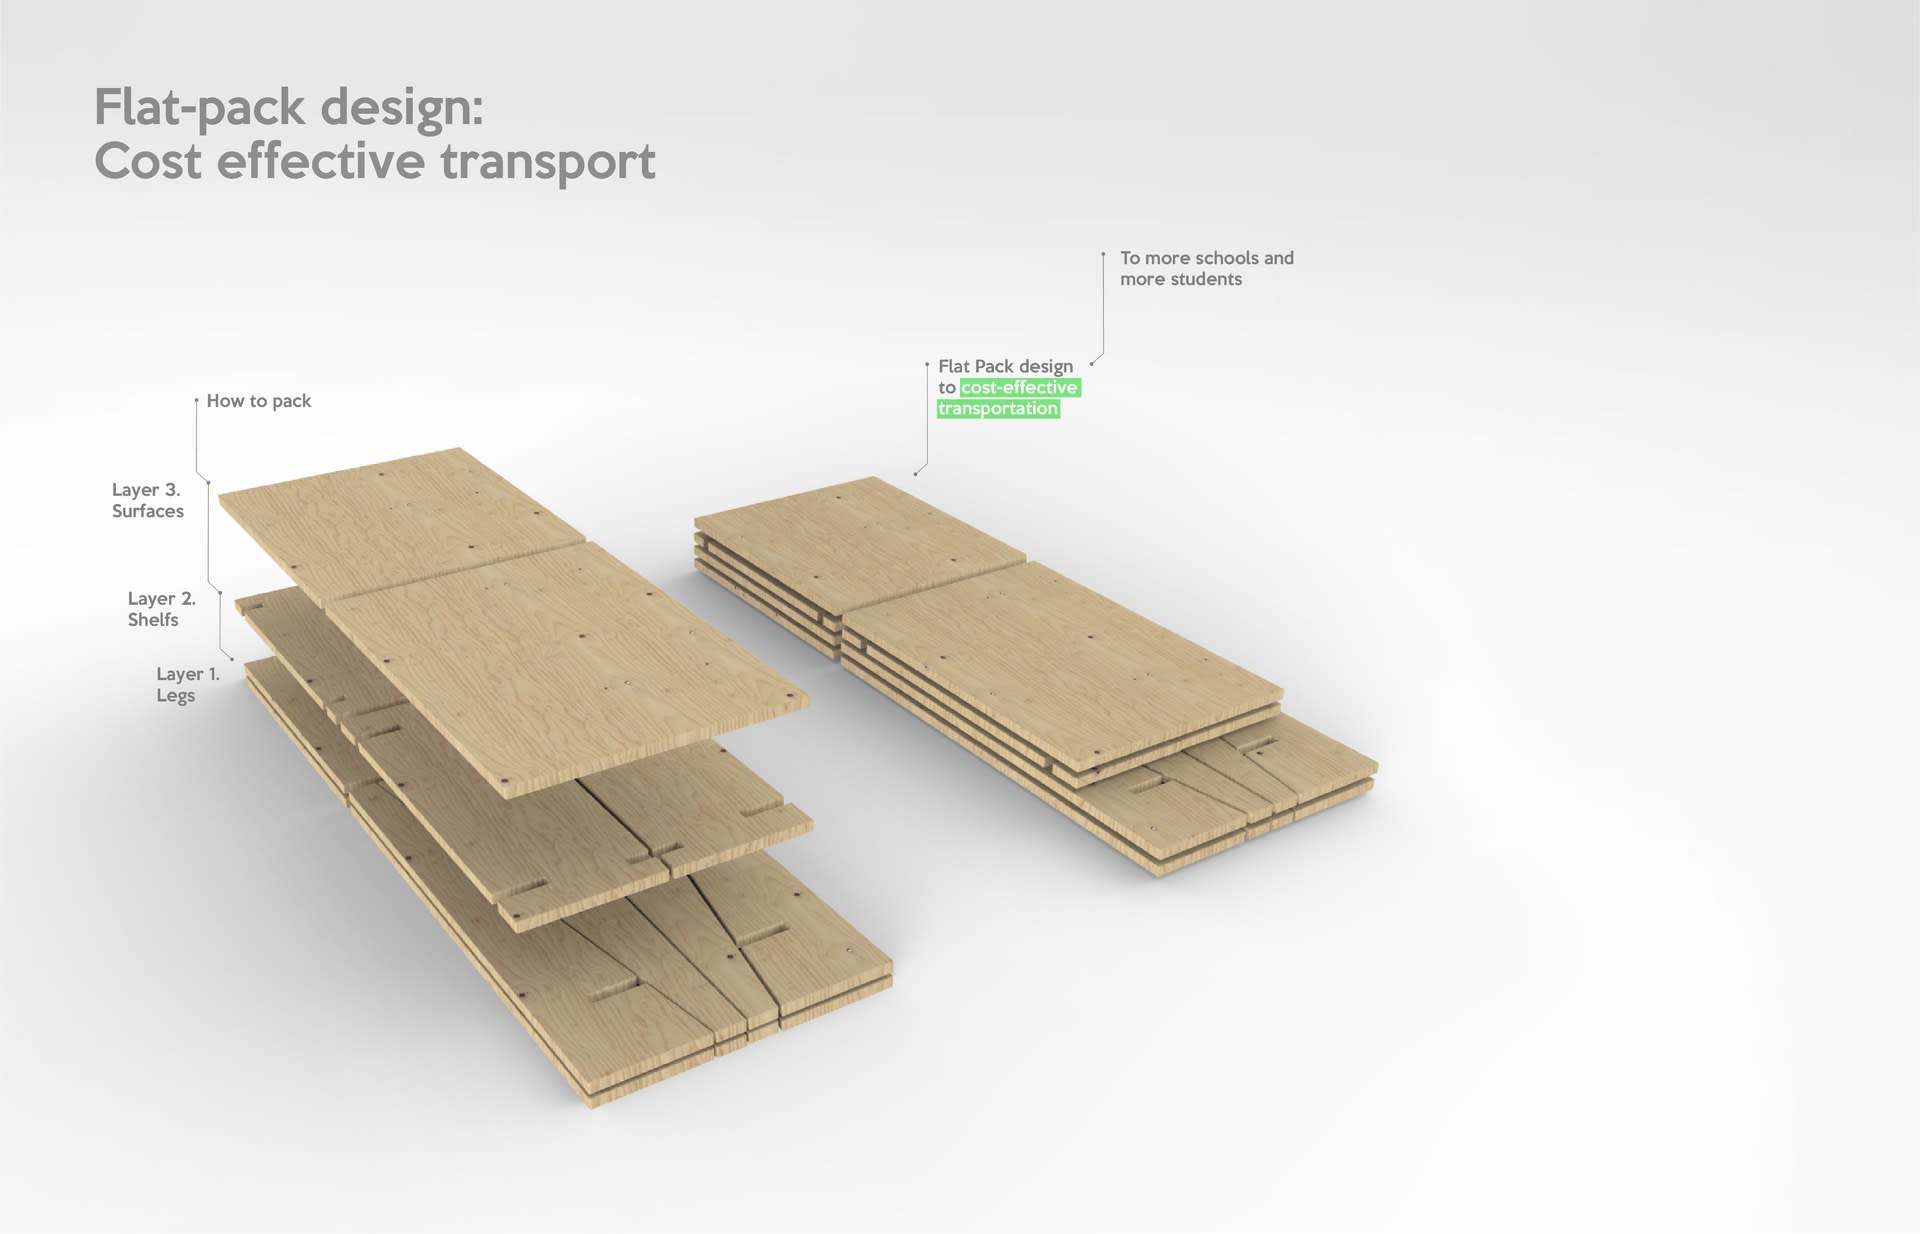 Flat-pack design: Enhancing distribution efficiencies.